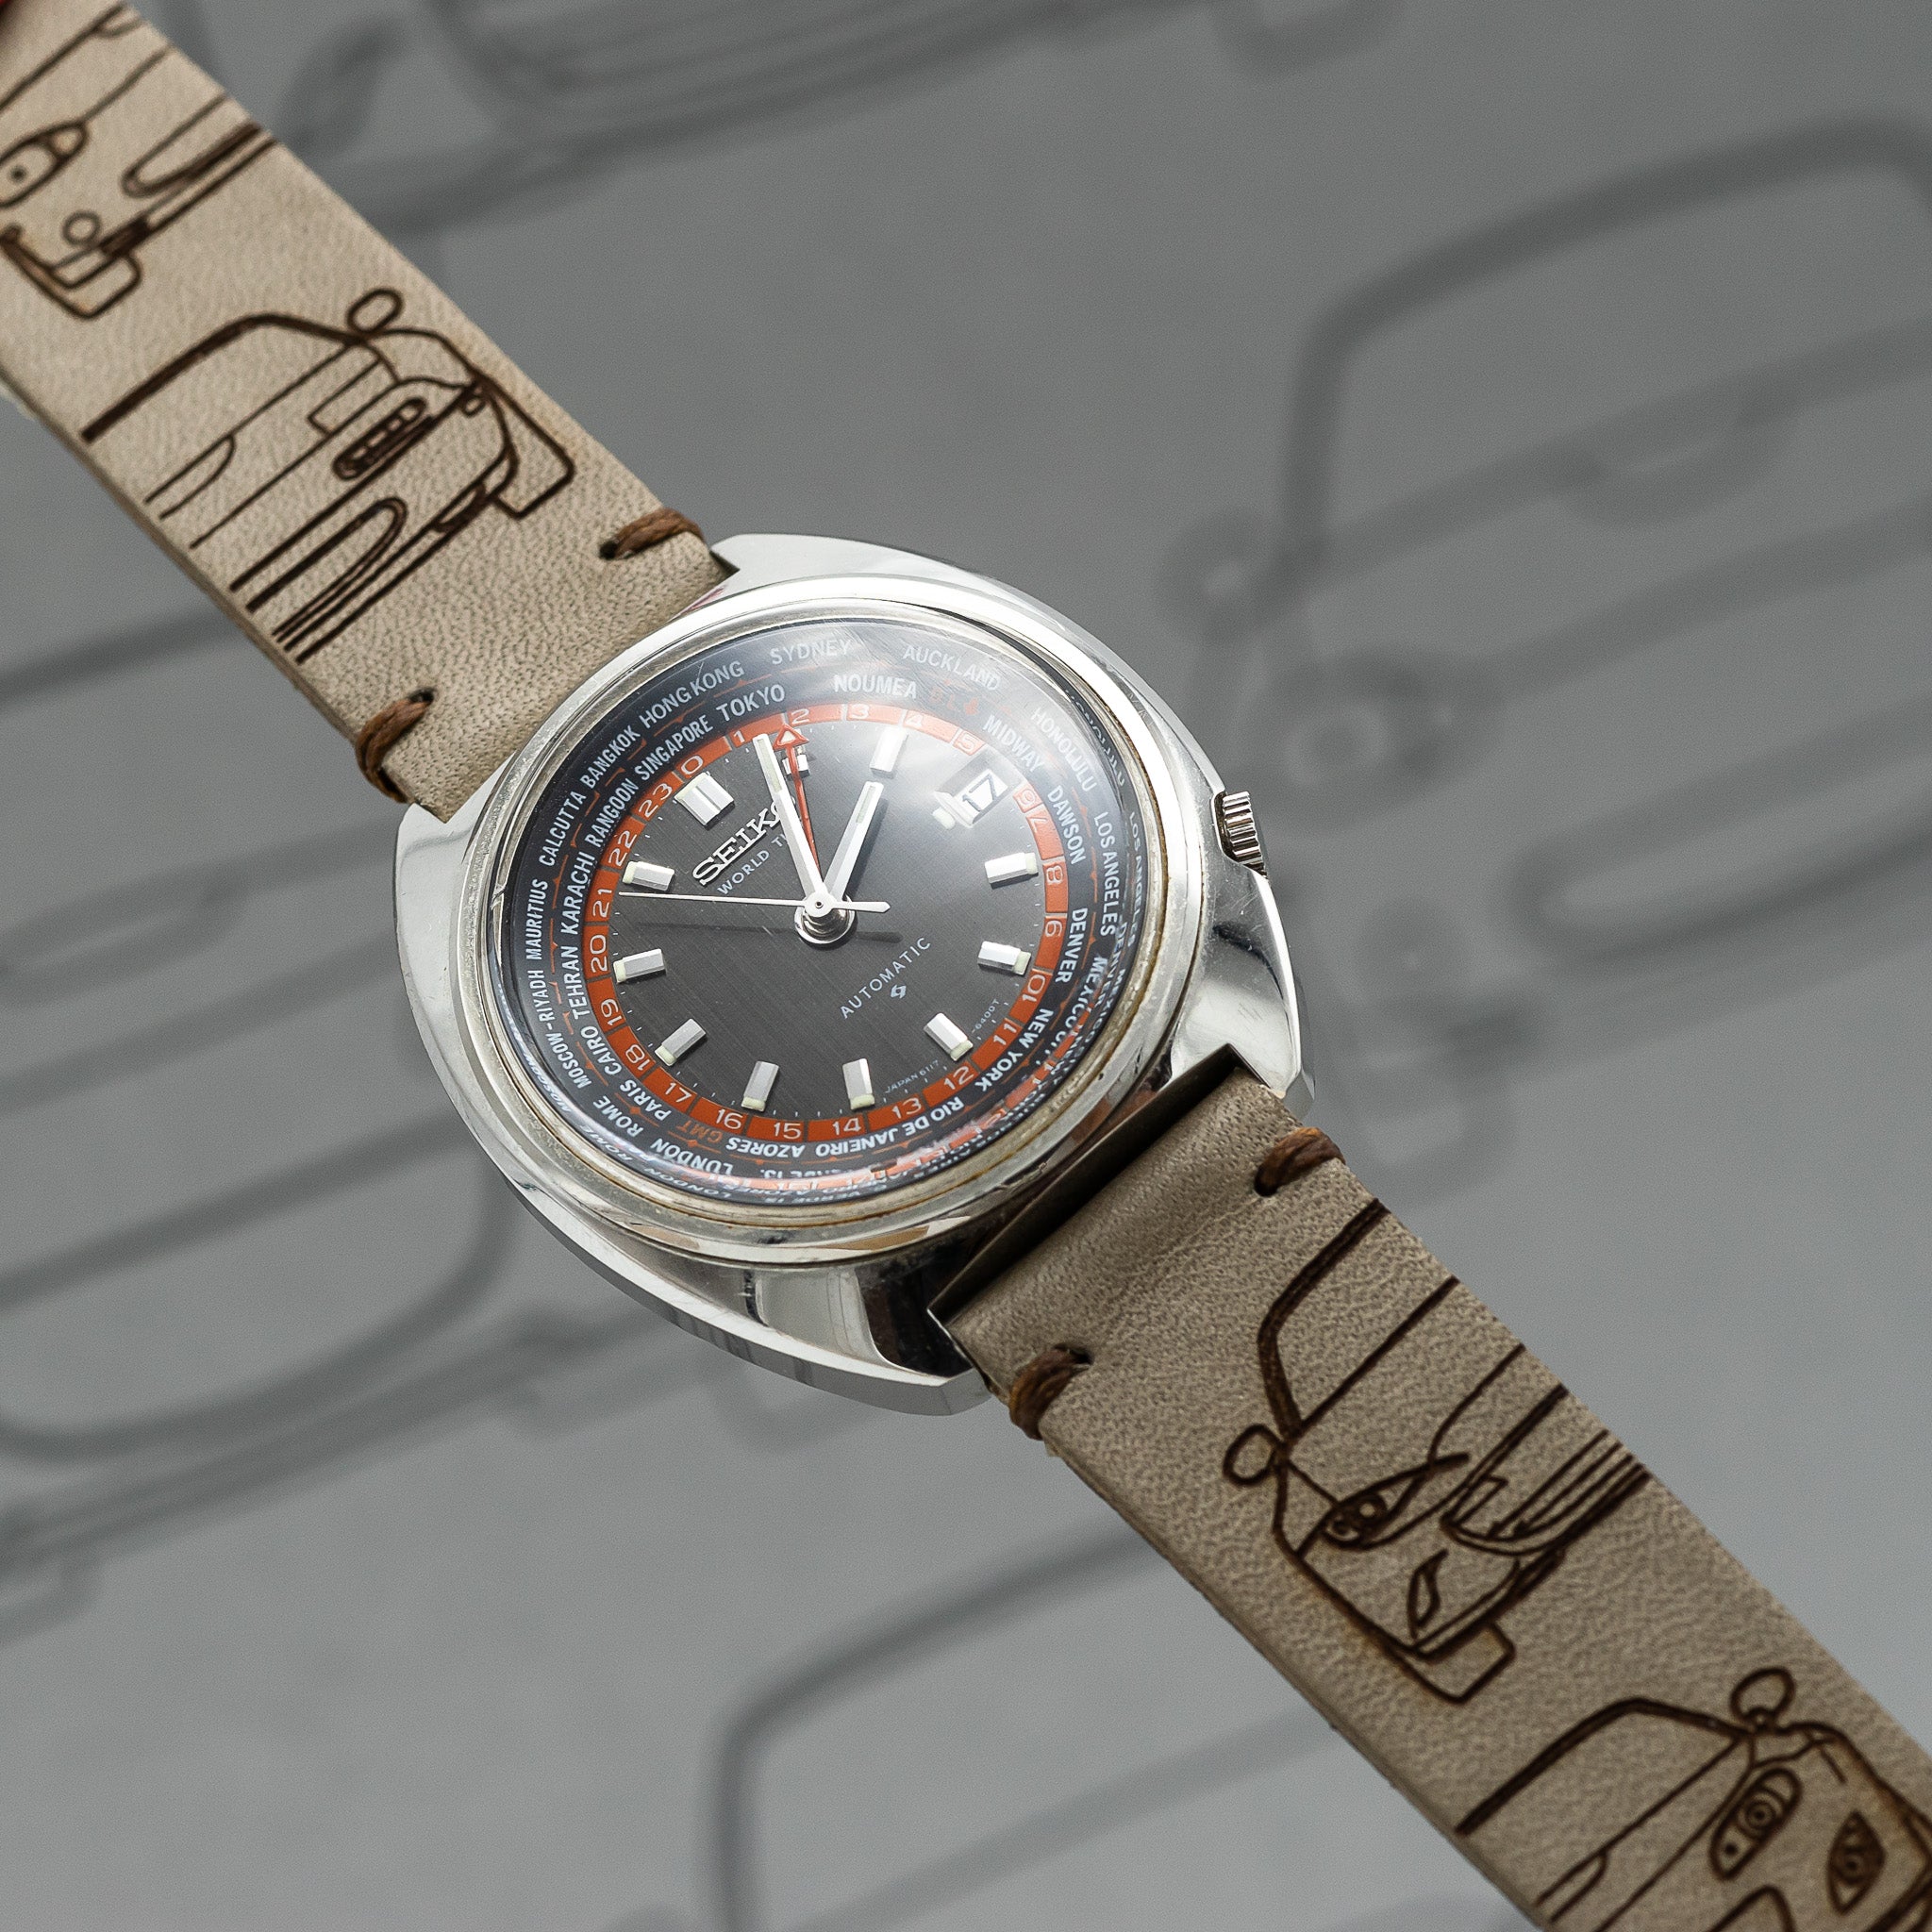 REM – Miata Generations – Laser engraved watch strap celebrating Mazda MX-5  – REM Straps